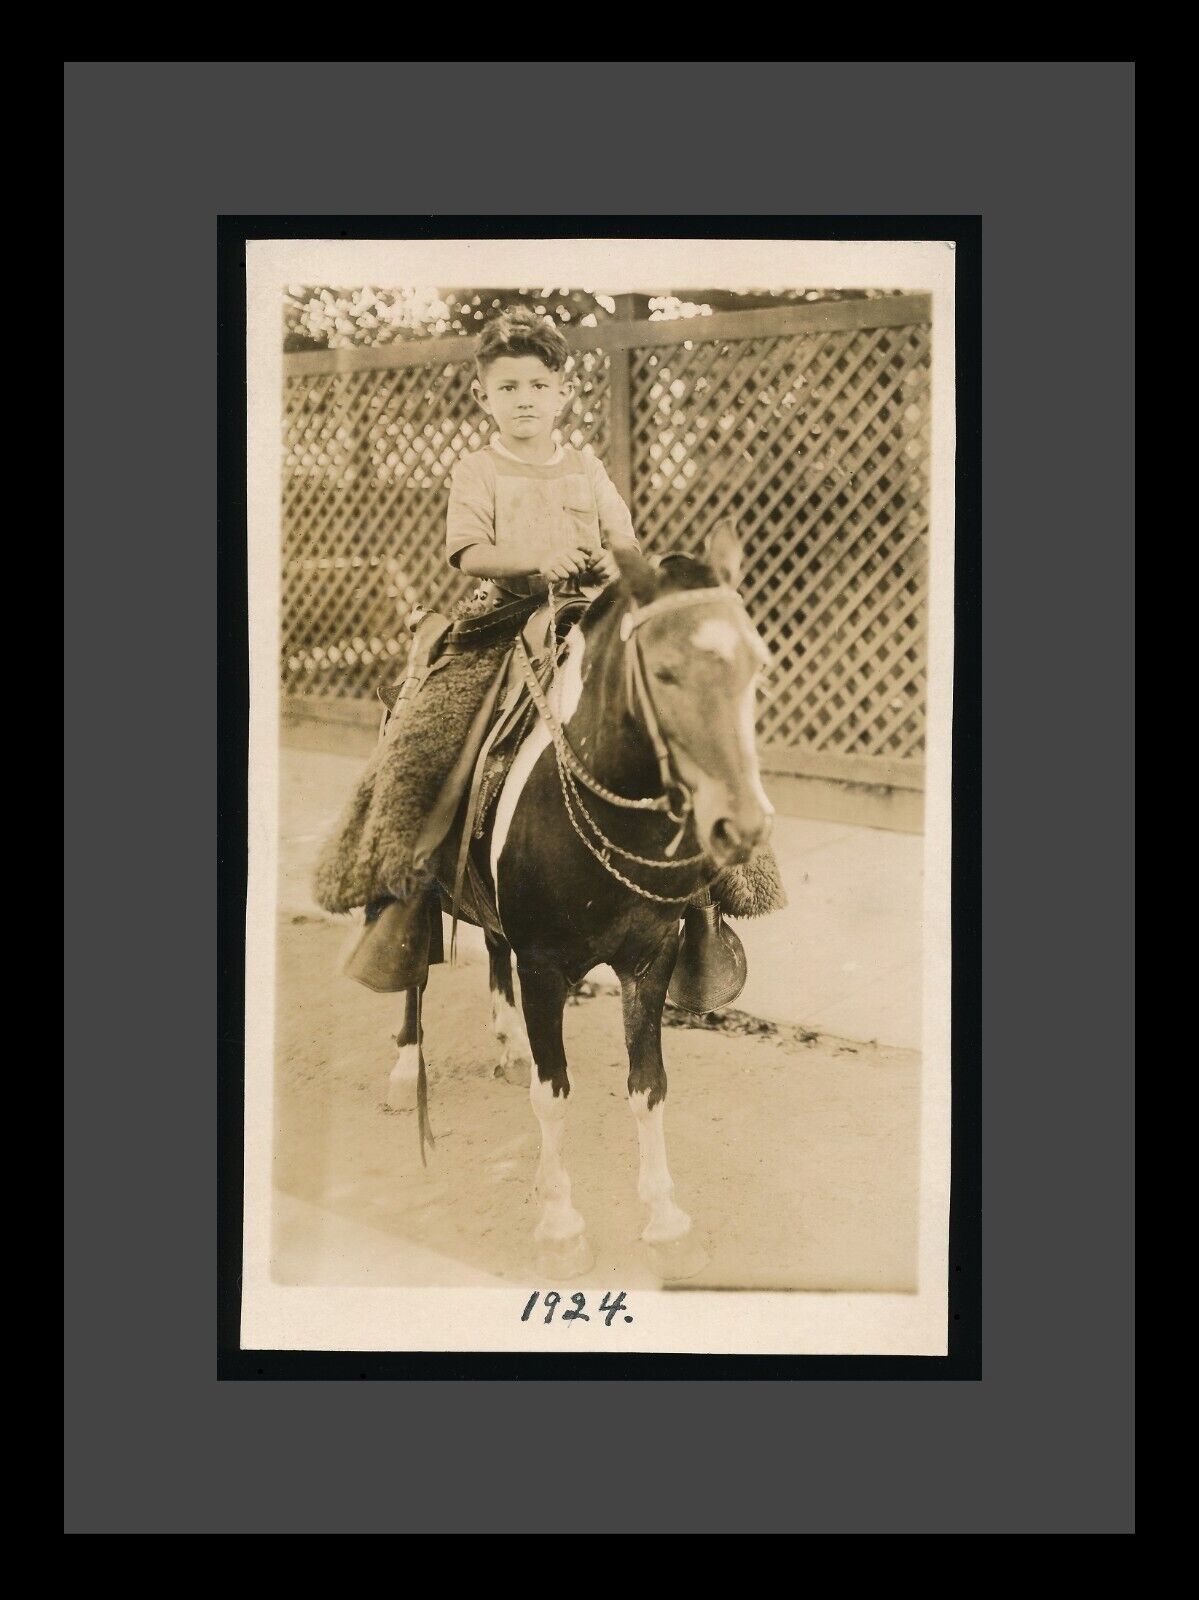 1924 Little Boy Pony Ride Cute Western Cowboy on Horse Vintage Snapshot Photo